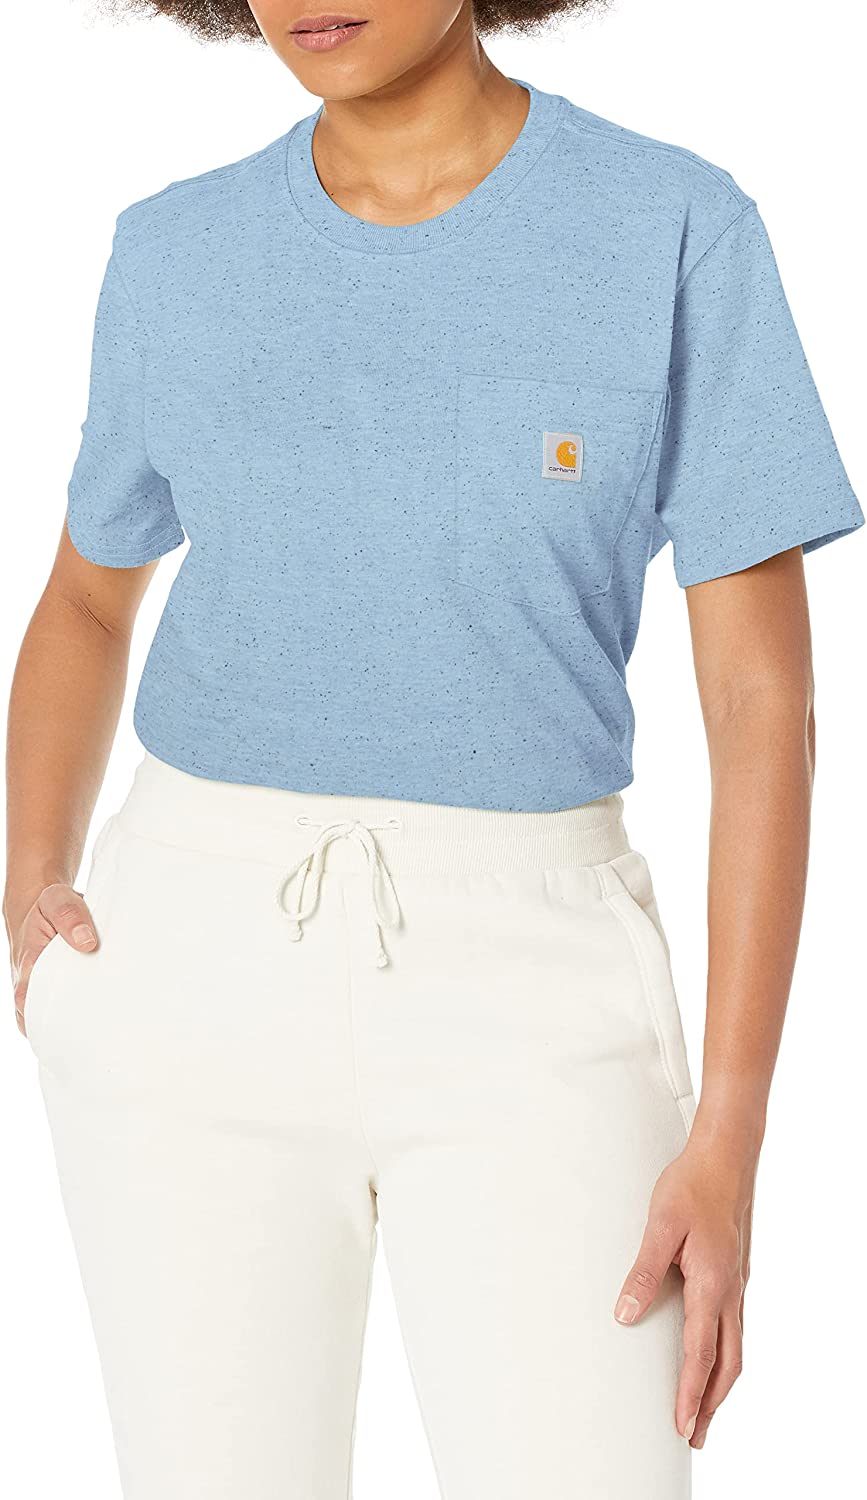 Women's Loose Fit Heavyweight Short-Sleeve Pocket T-Shirt (Regular and Plus Sizes)